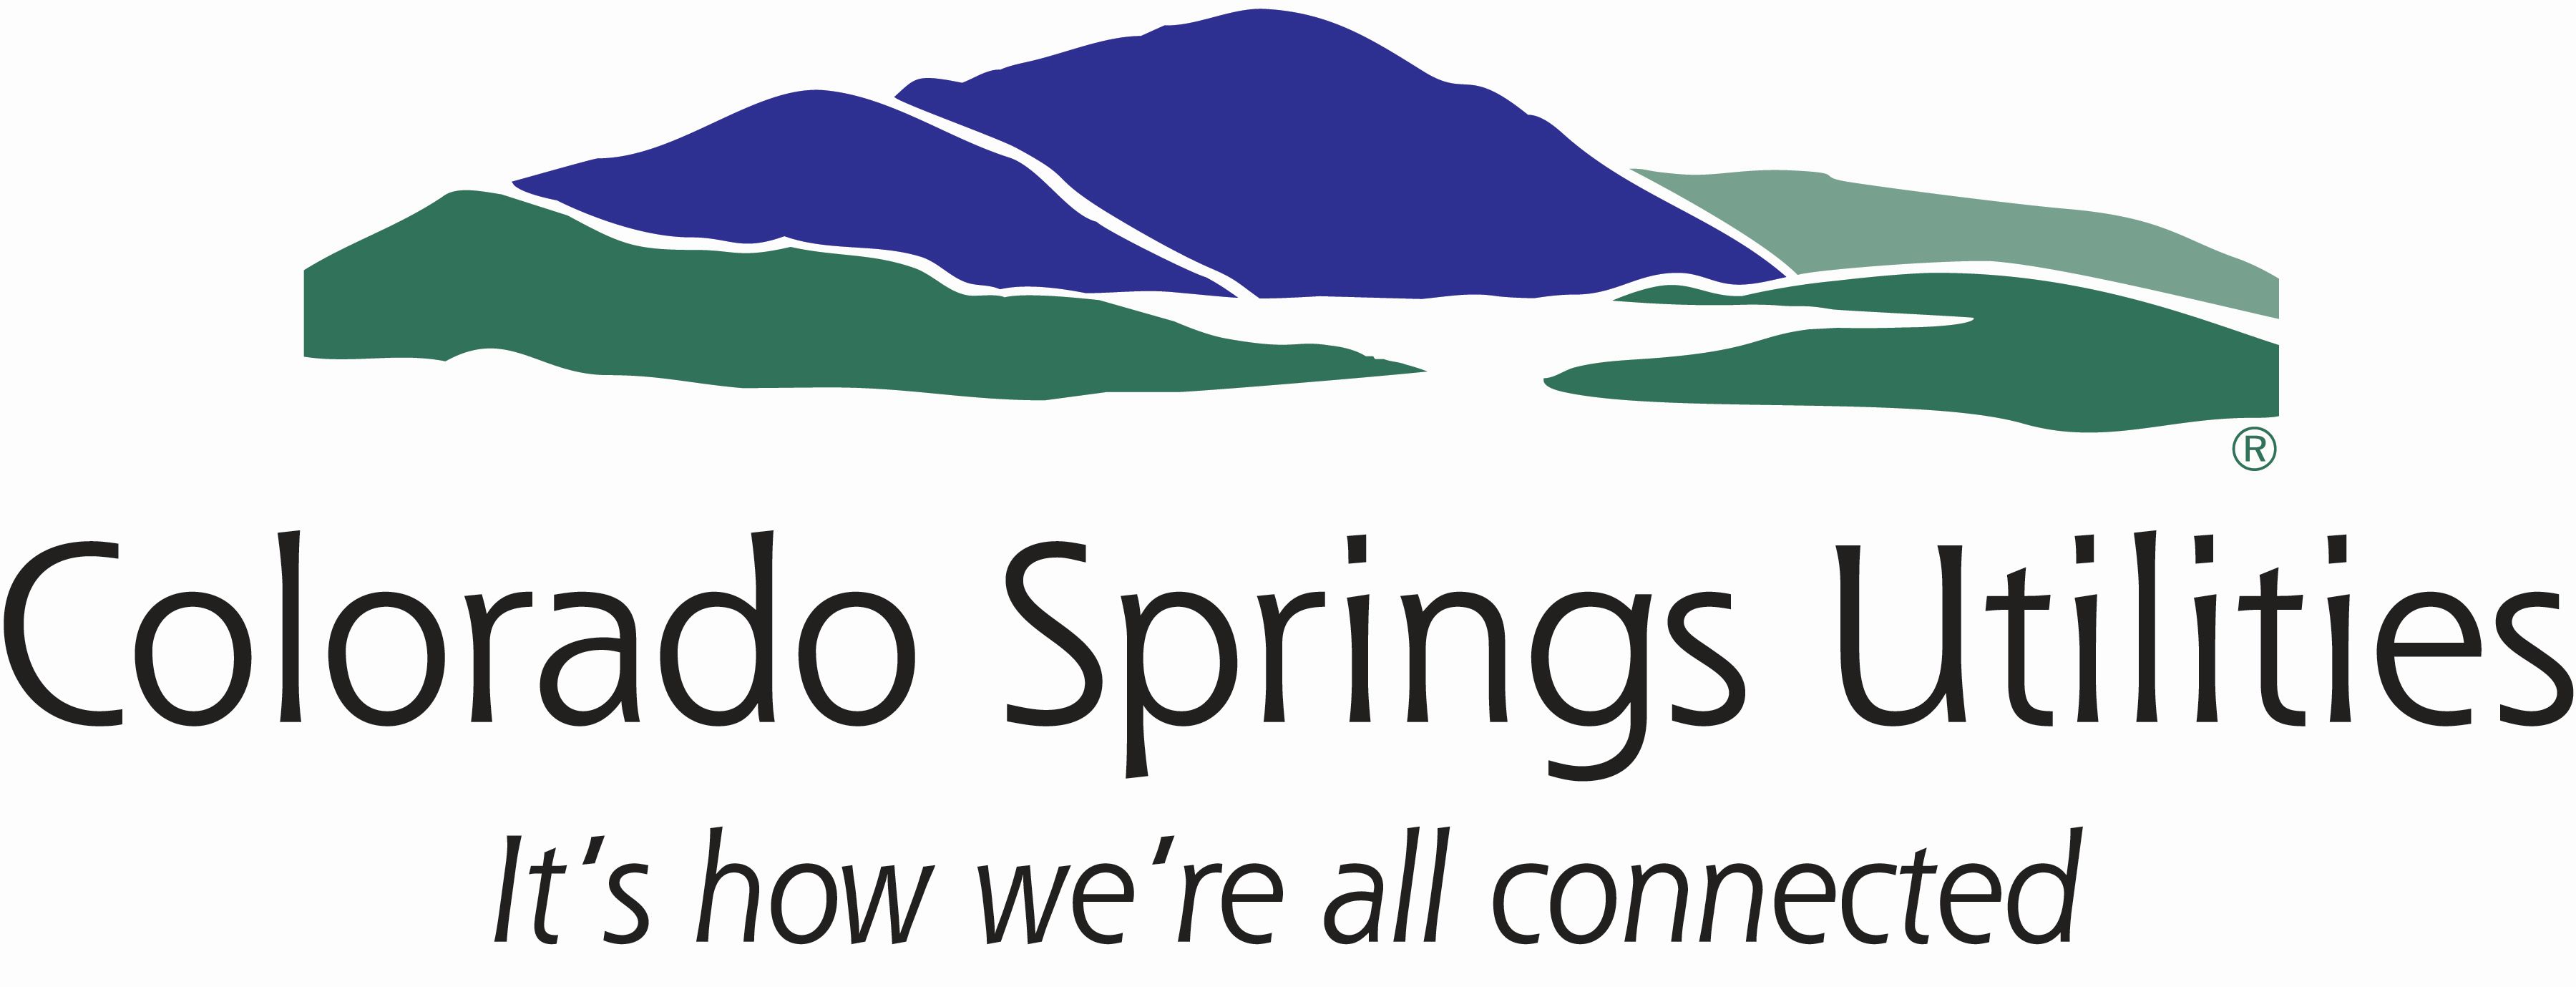 Colorado Springs Utilities Customer Service Number